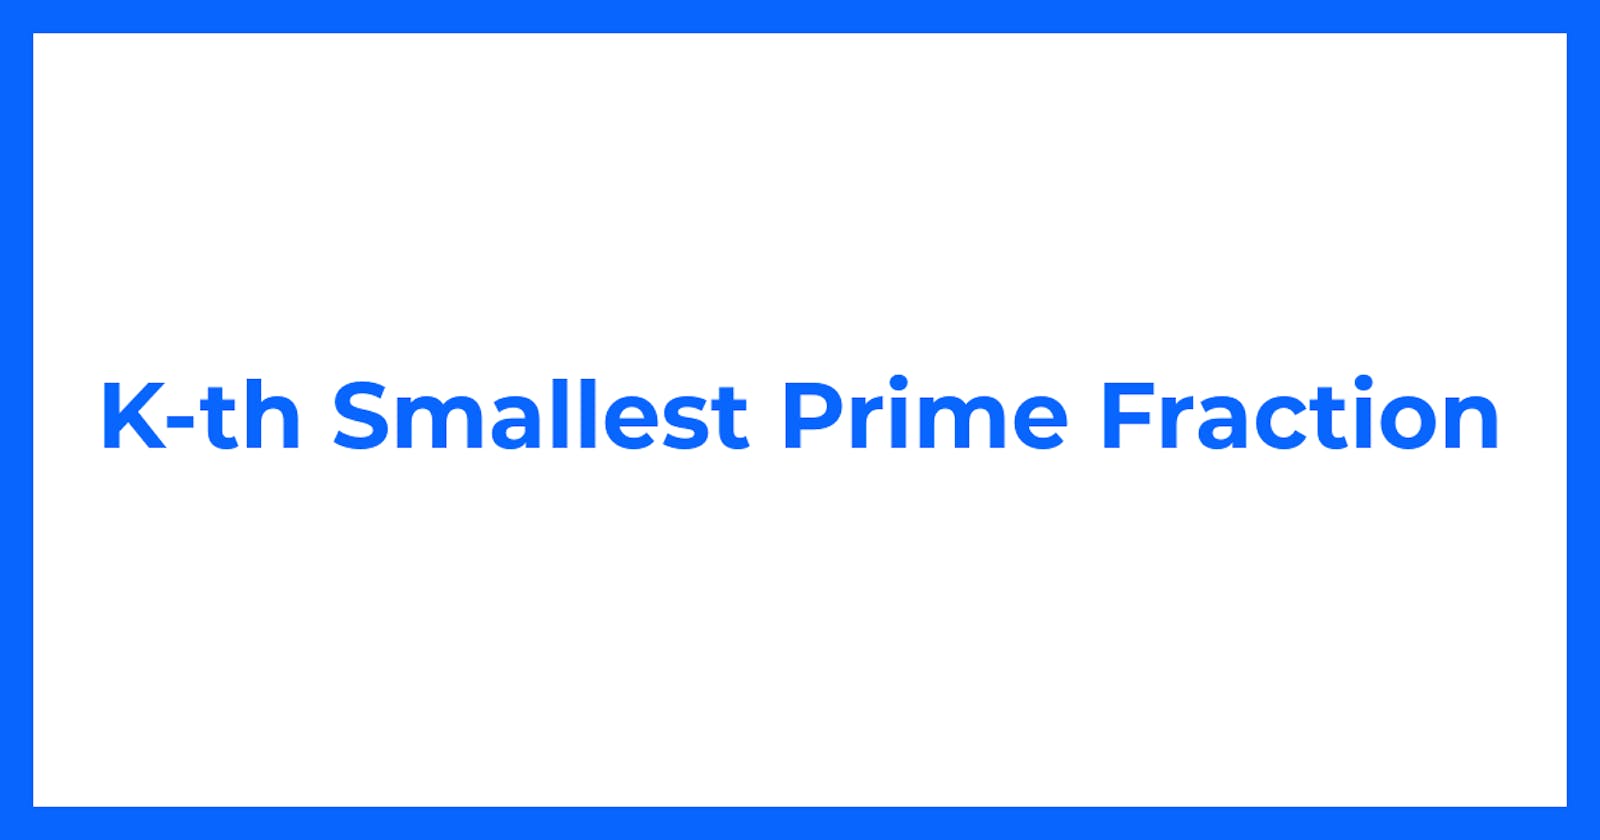 K-th Smallest Prime Fraction